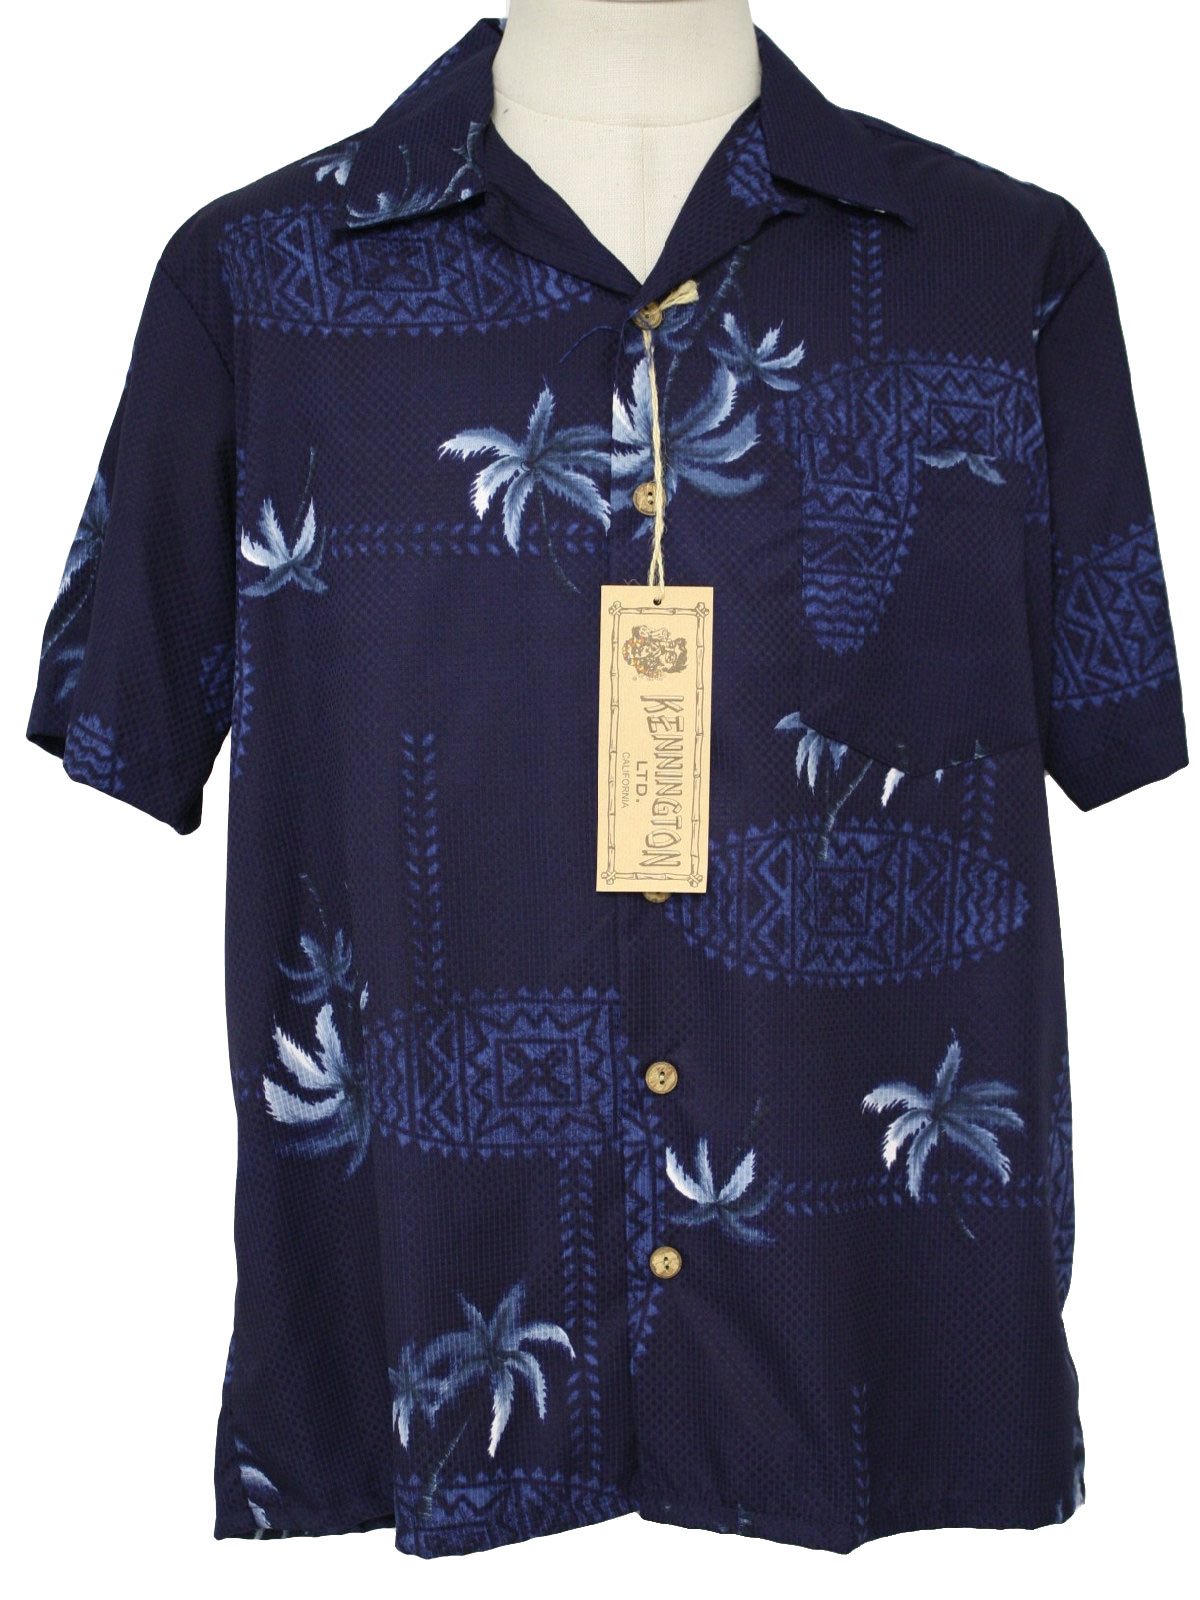 1980s Kennington Hawaiian Shirt: 80s style (made more recently